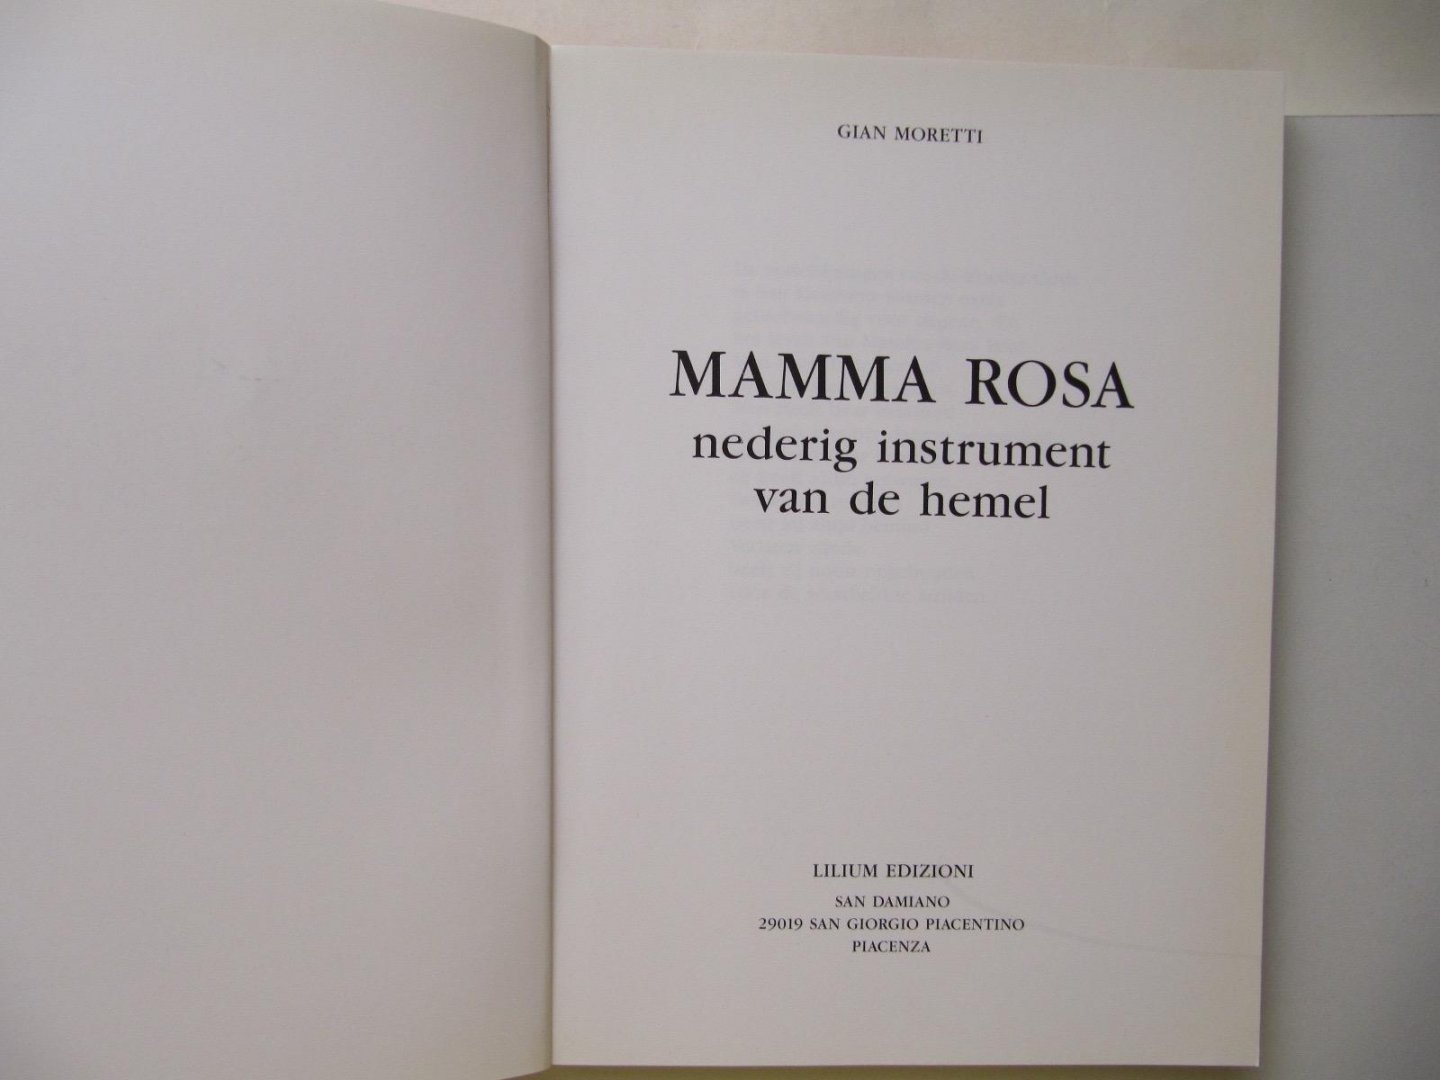 Gian Moretti - Mamma Rosa - nederig instrument van de hemel